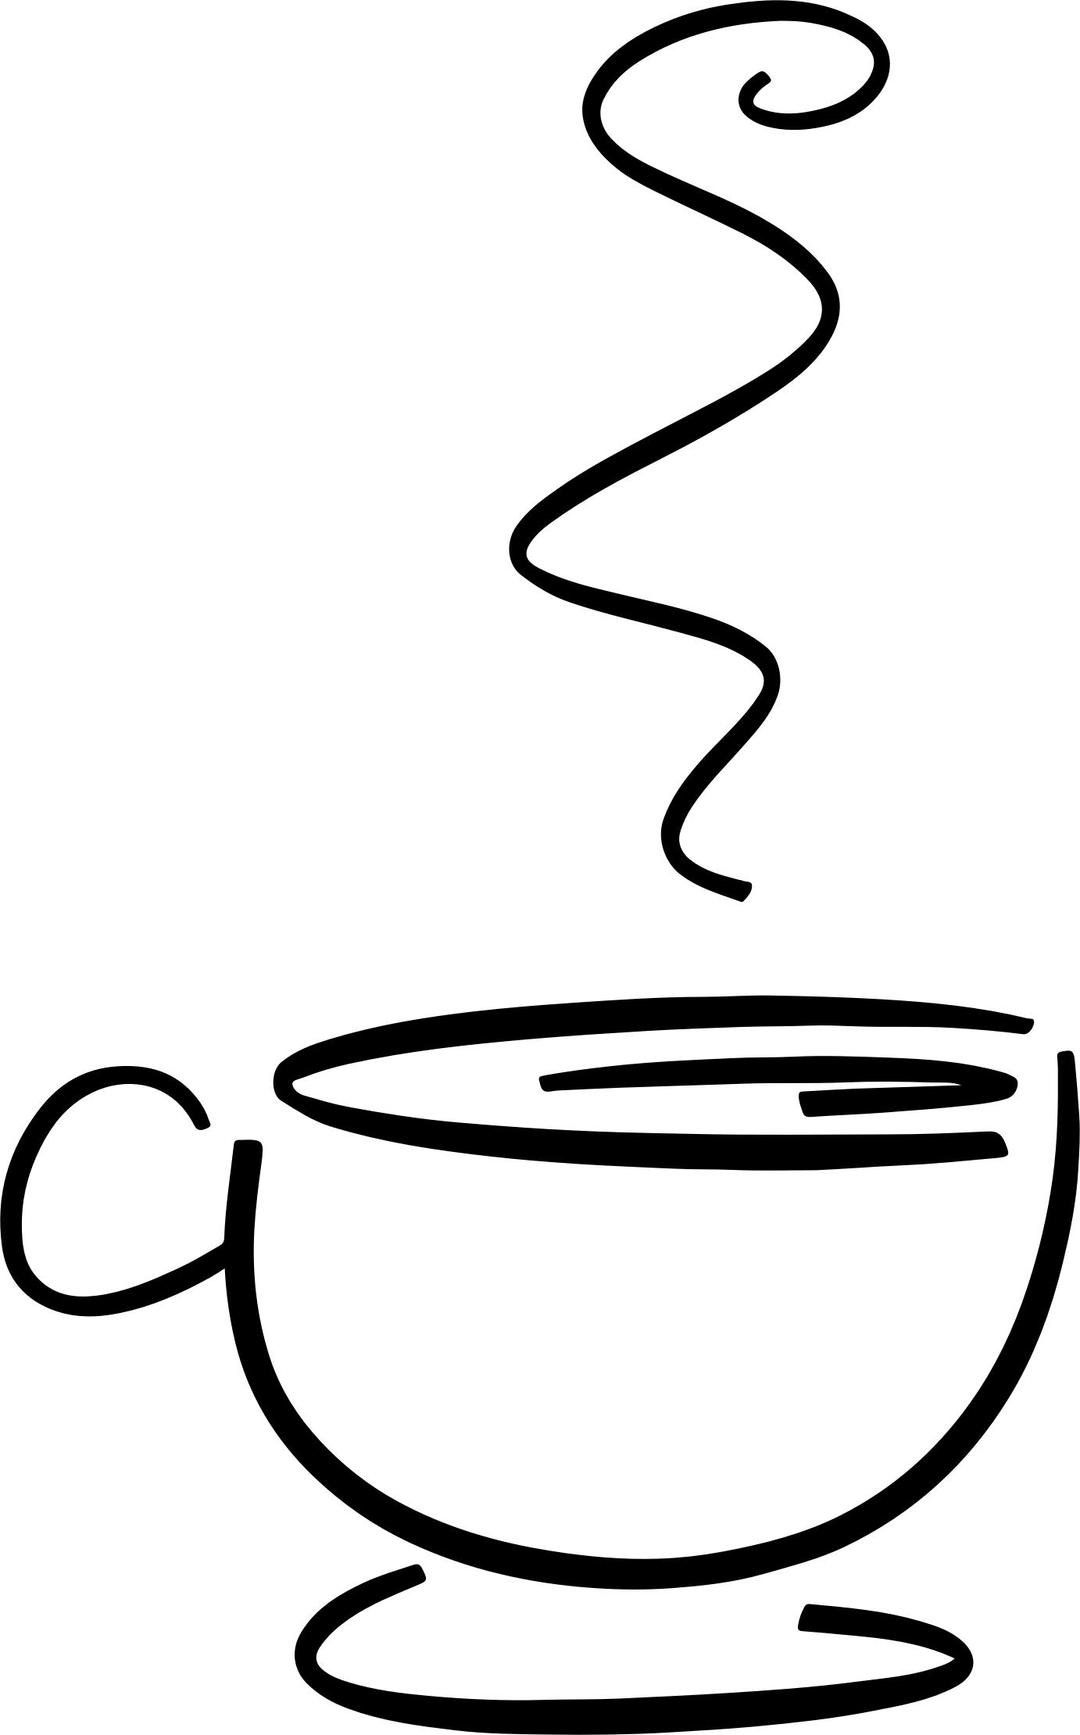 Cup Of Hot Beverage Line Art png transparent